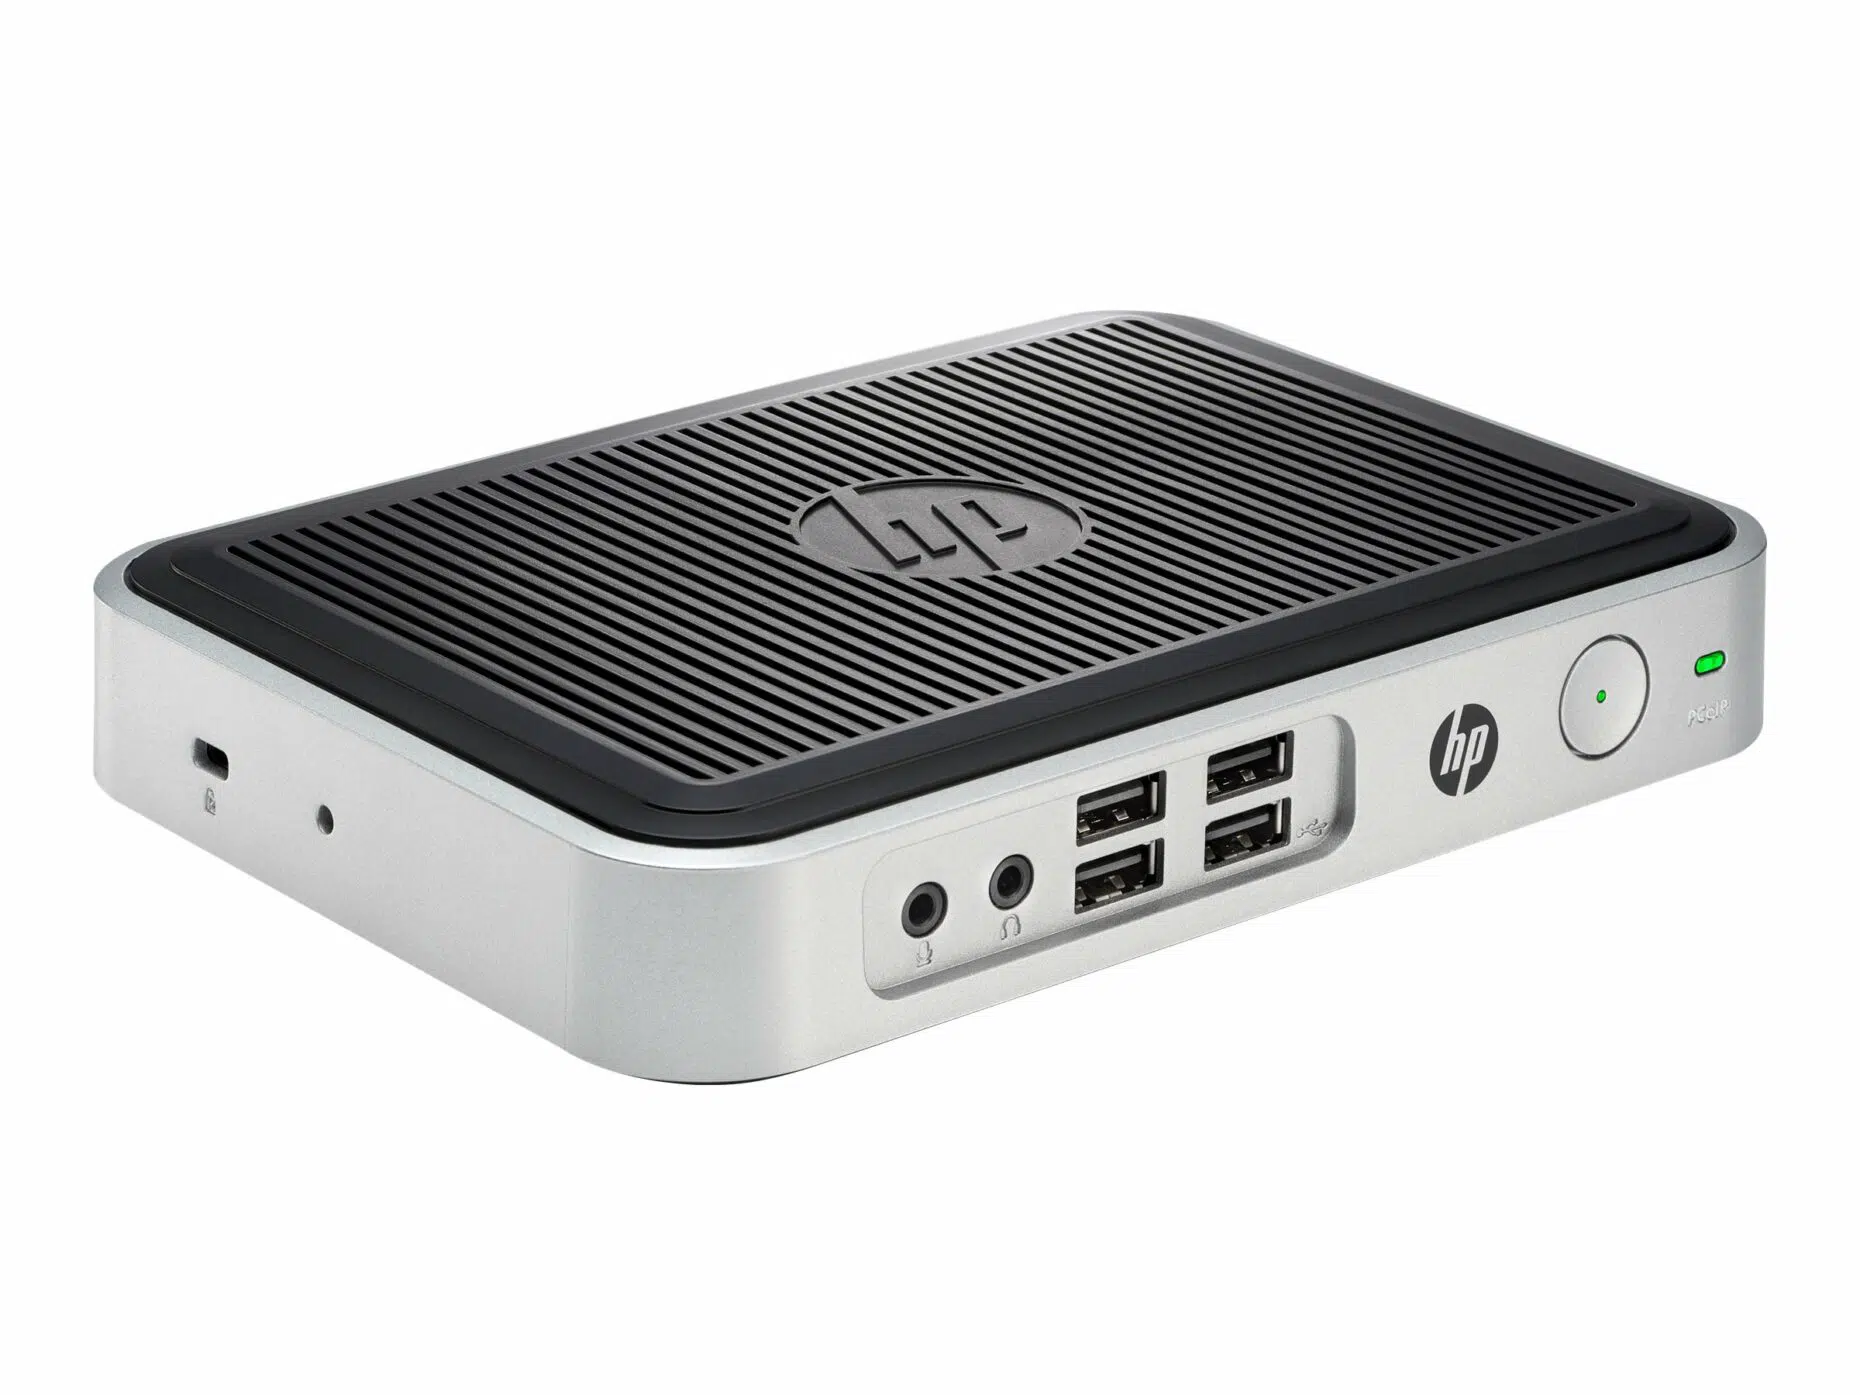 HP t310 G2 - Smart Buy - DTS Tera2321 - RAM 512MB - Flash - 32GB